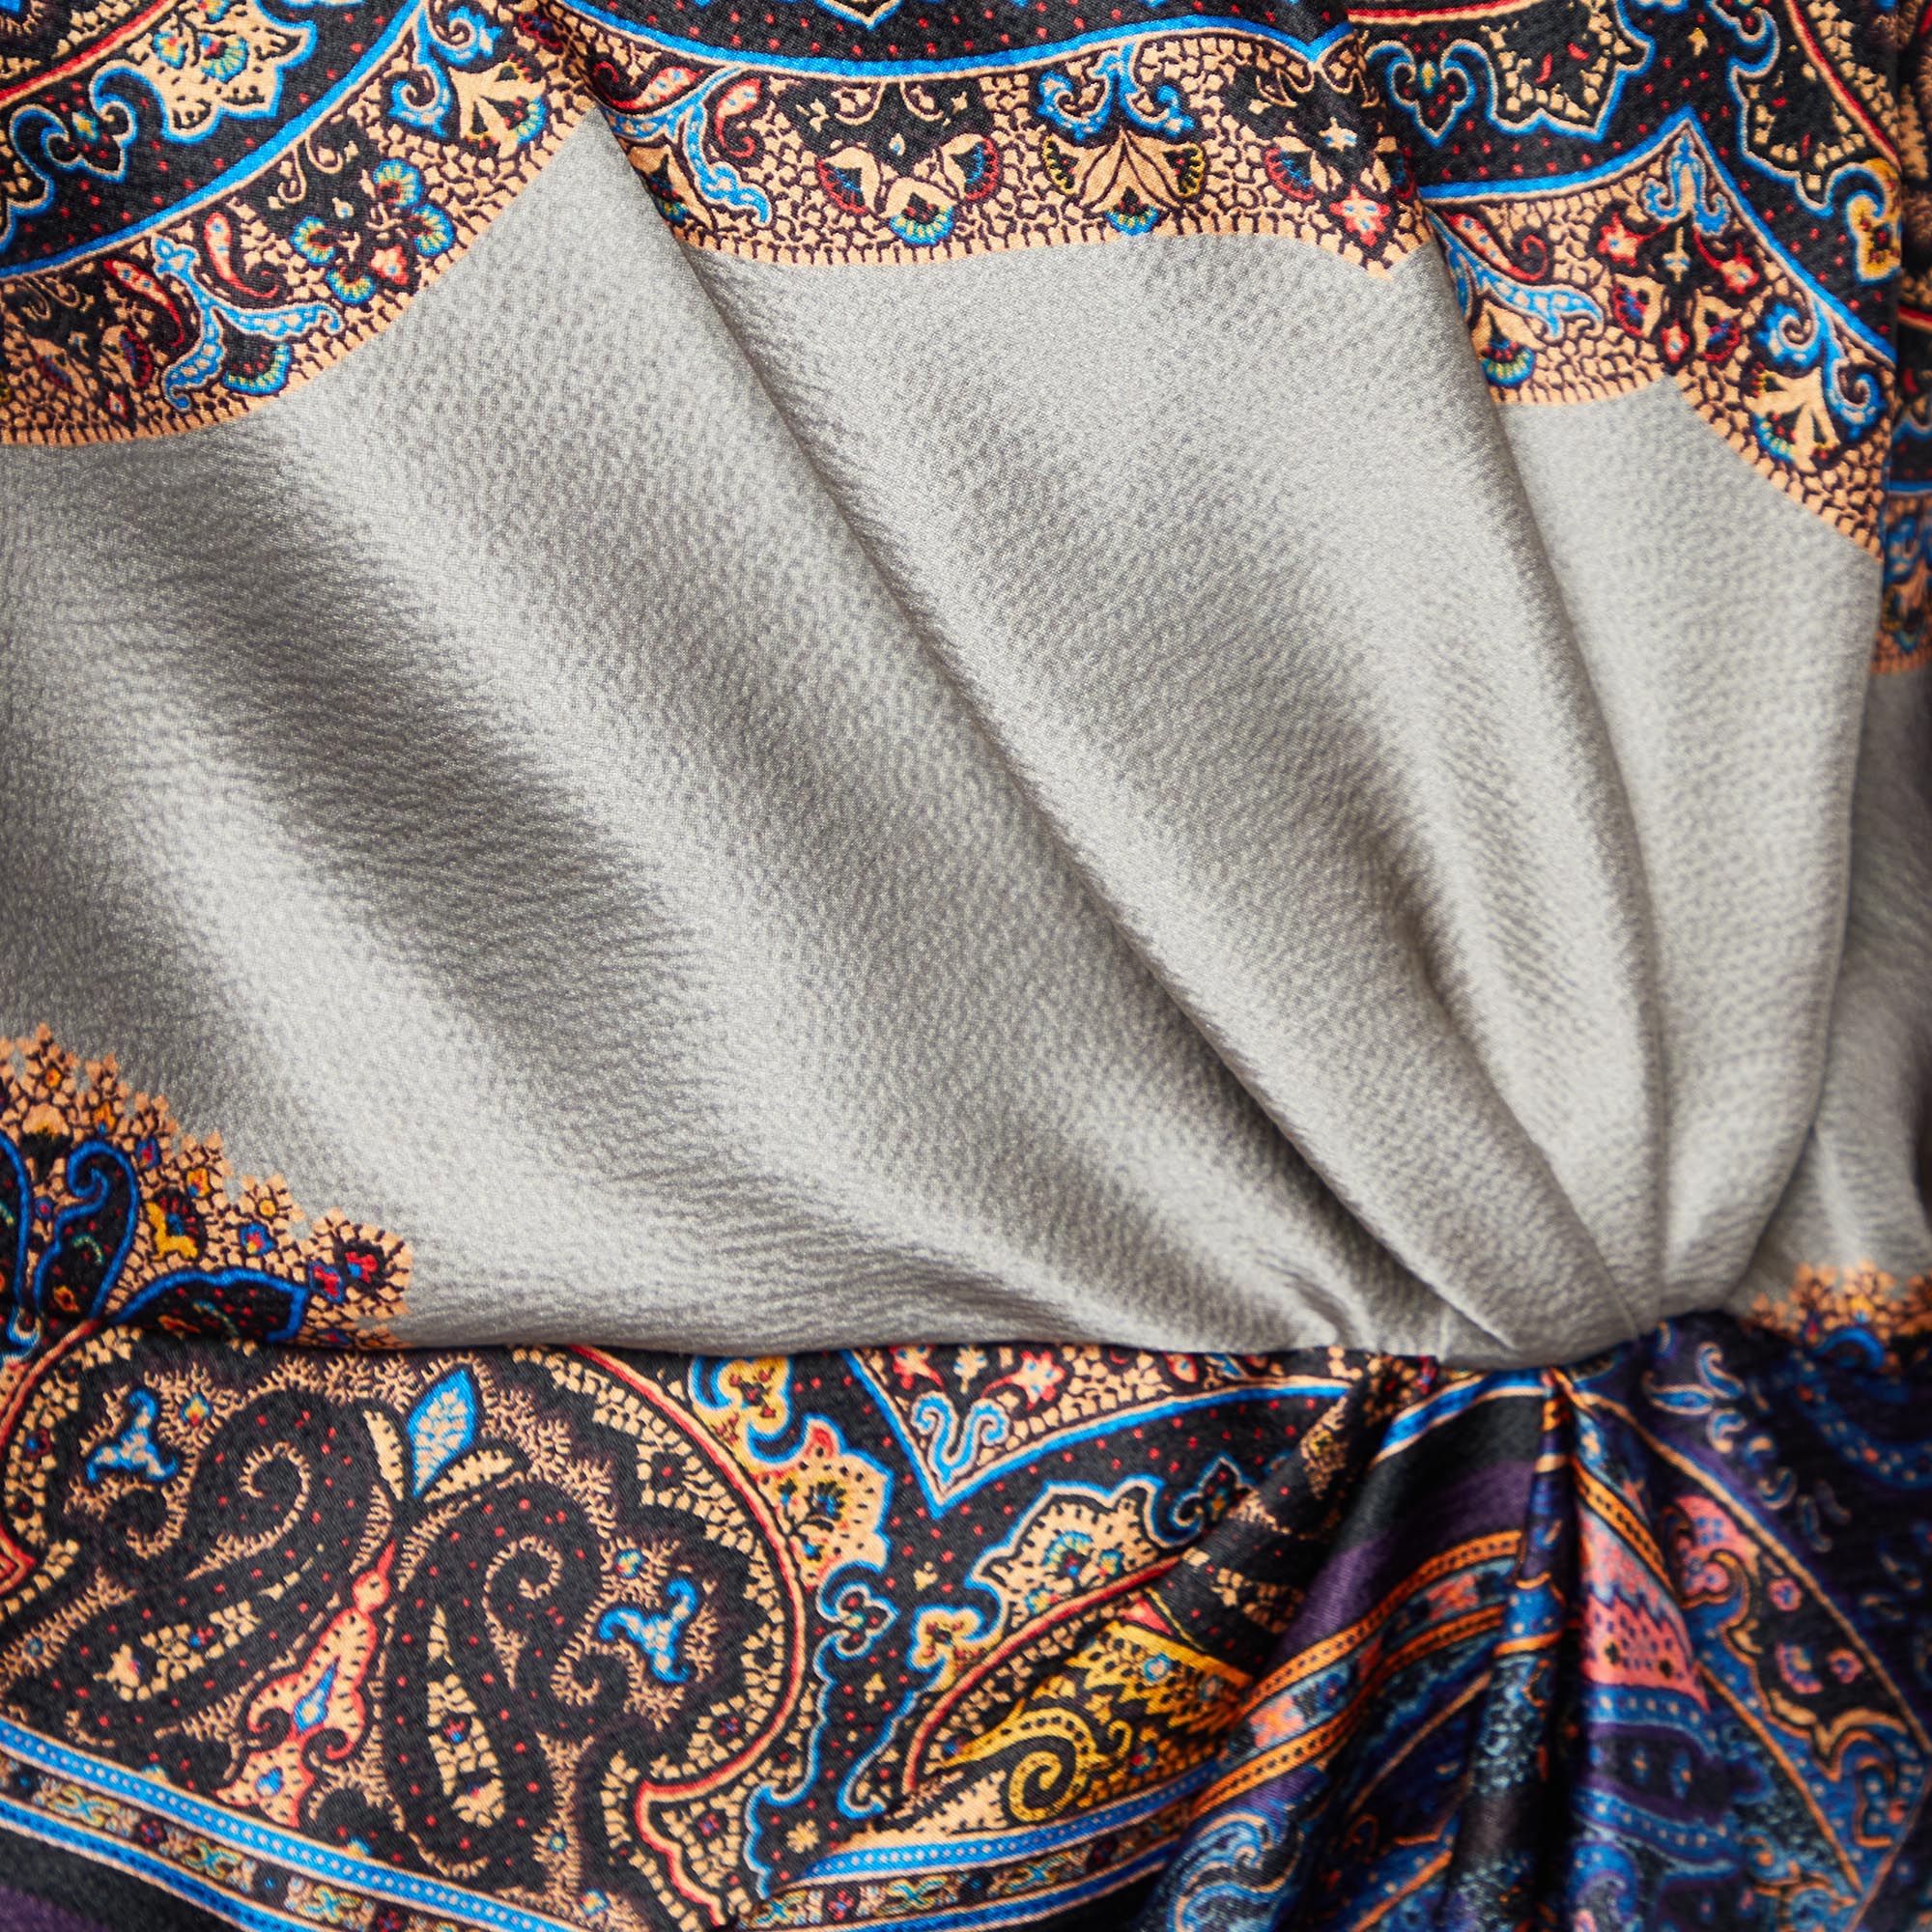 Etro Multicolor Printed Silk Draped Asymmetric Hem Dress L